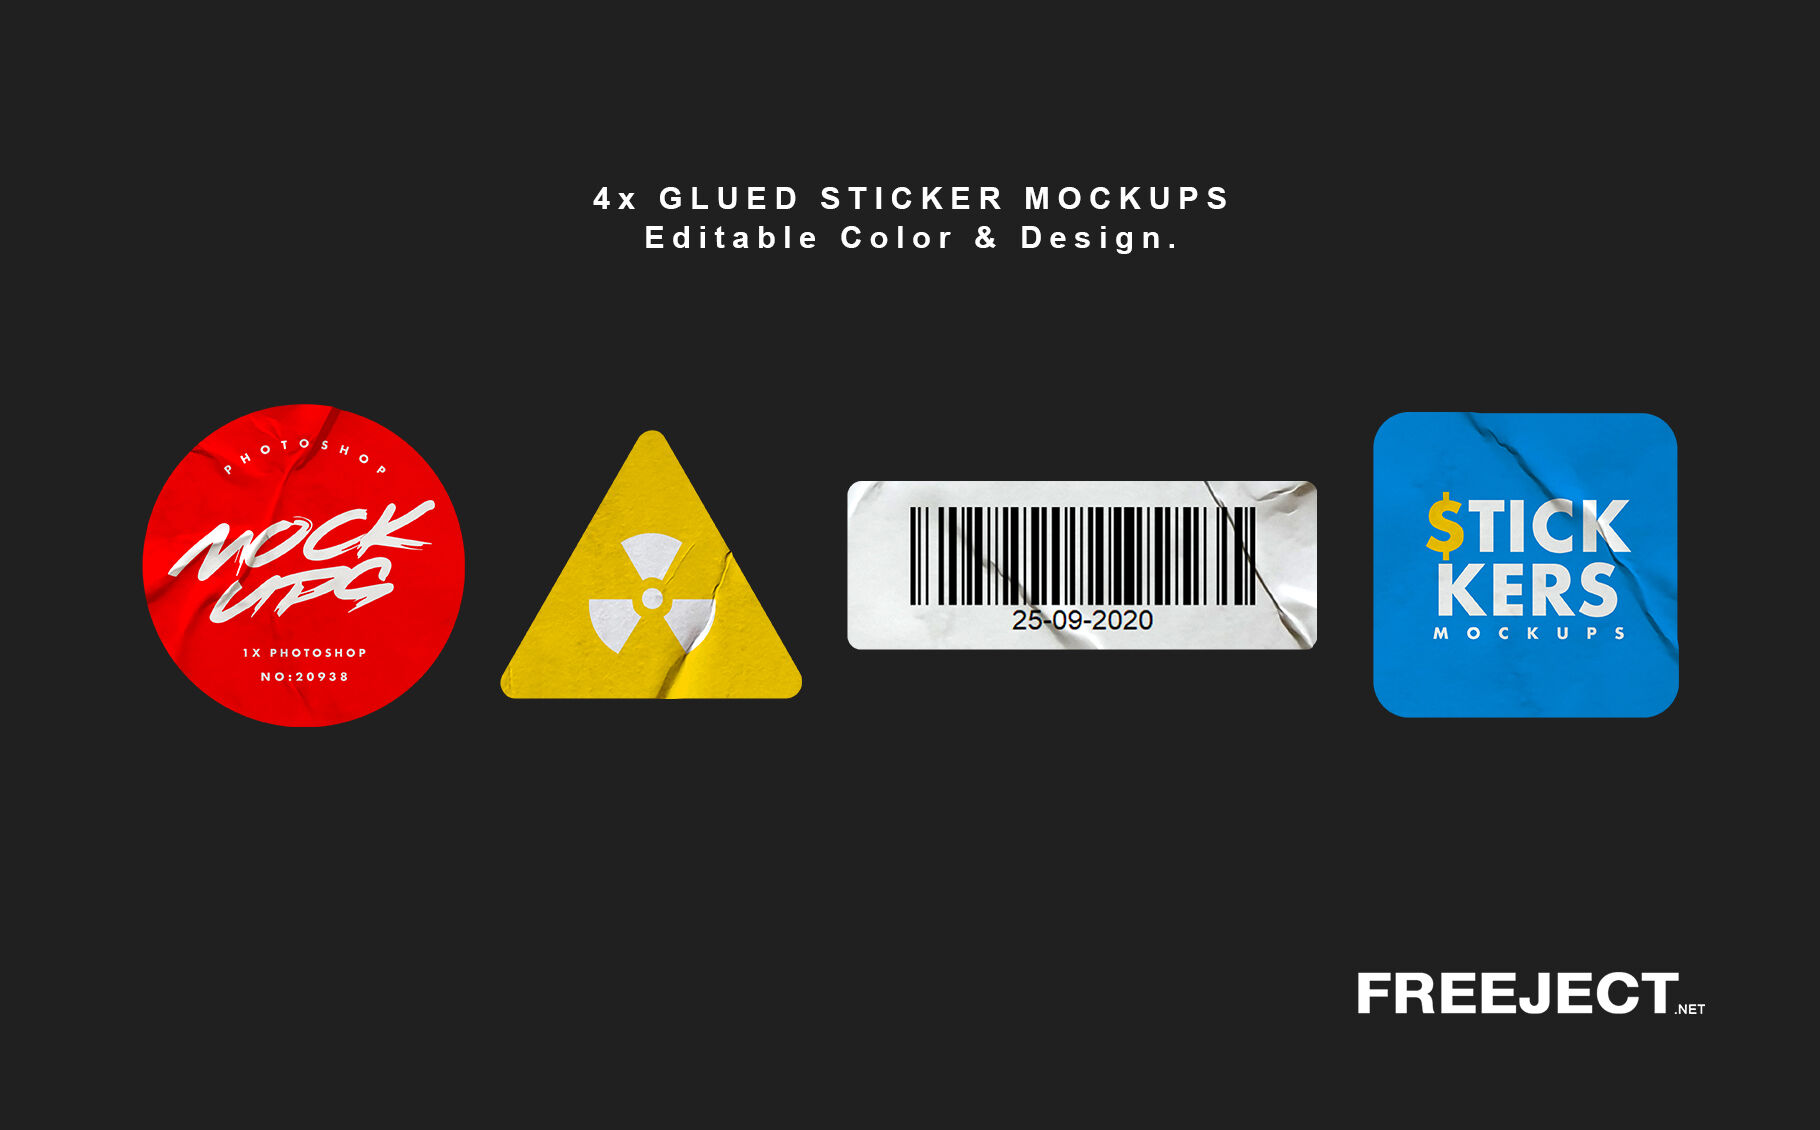 Four Glued Crumpled Stickers Mockups FREE PSD